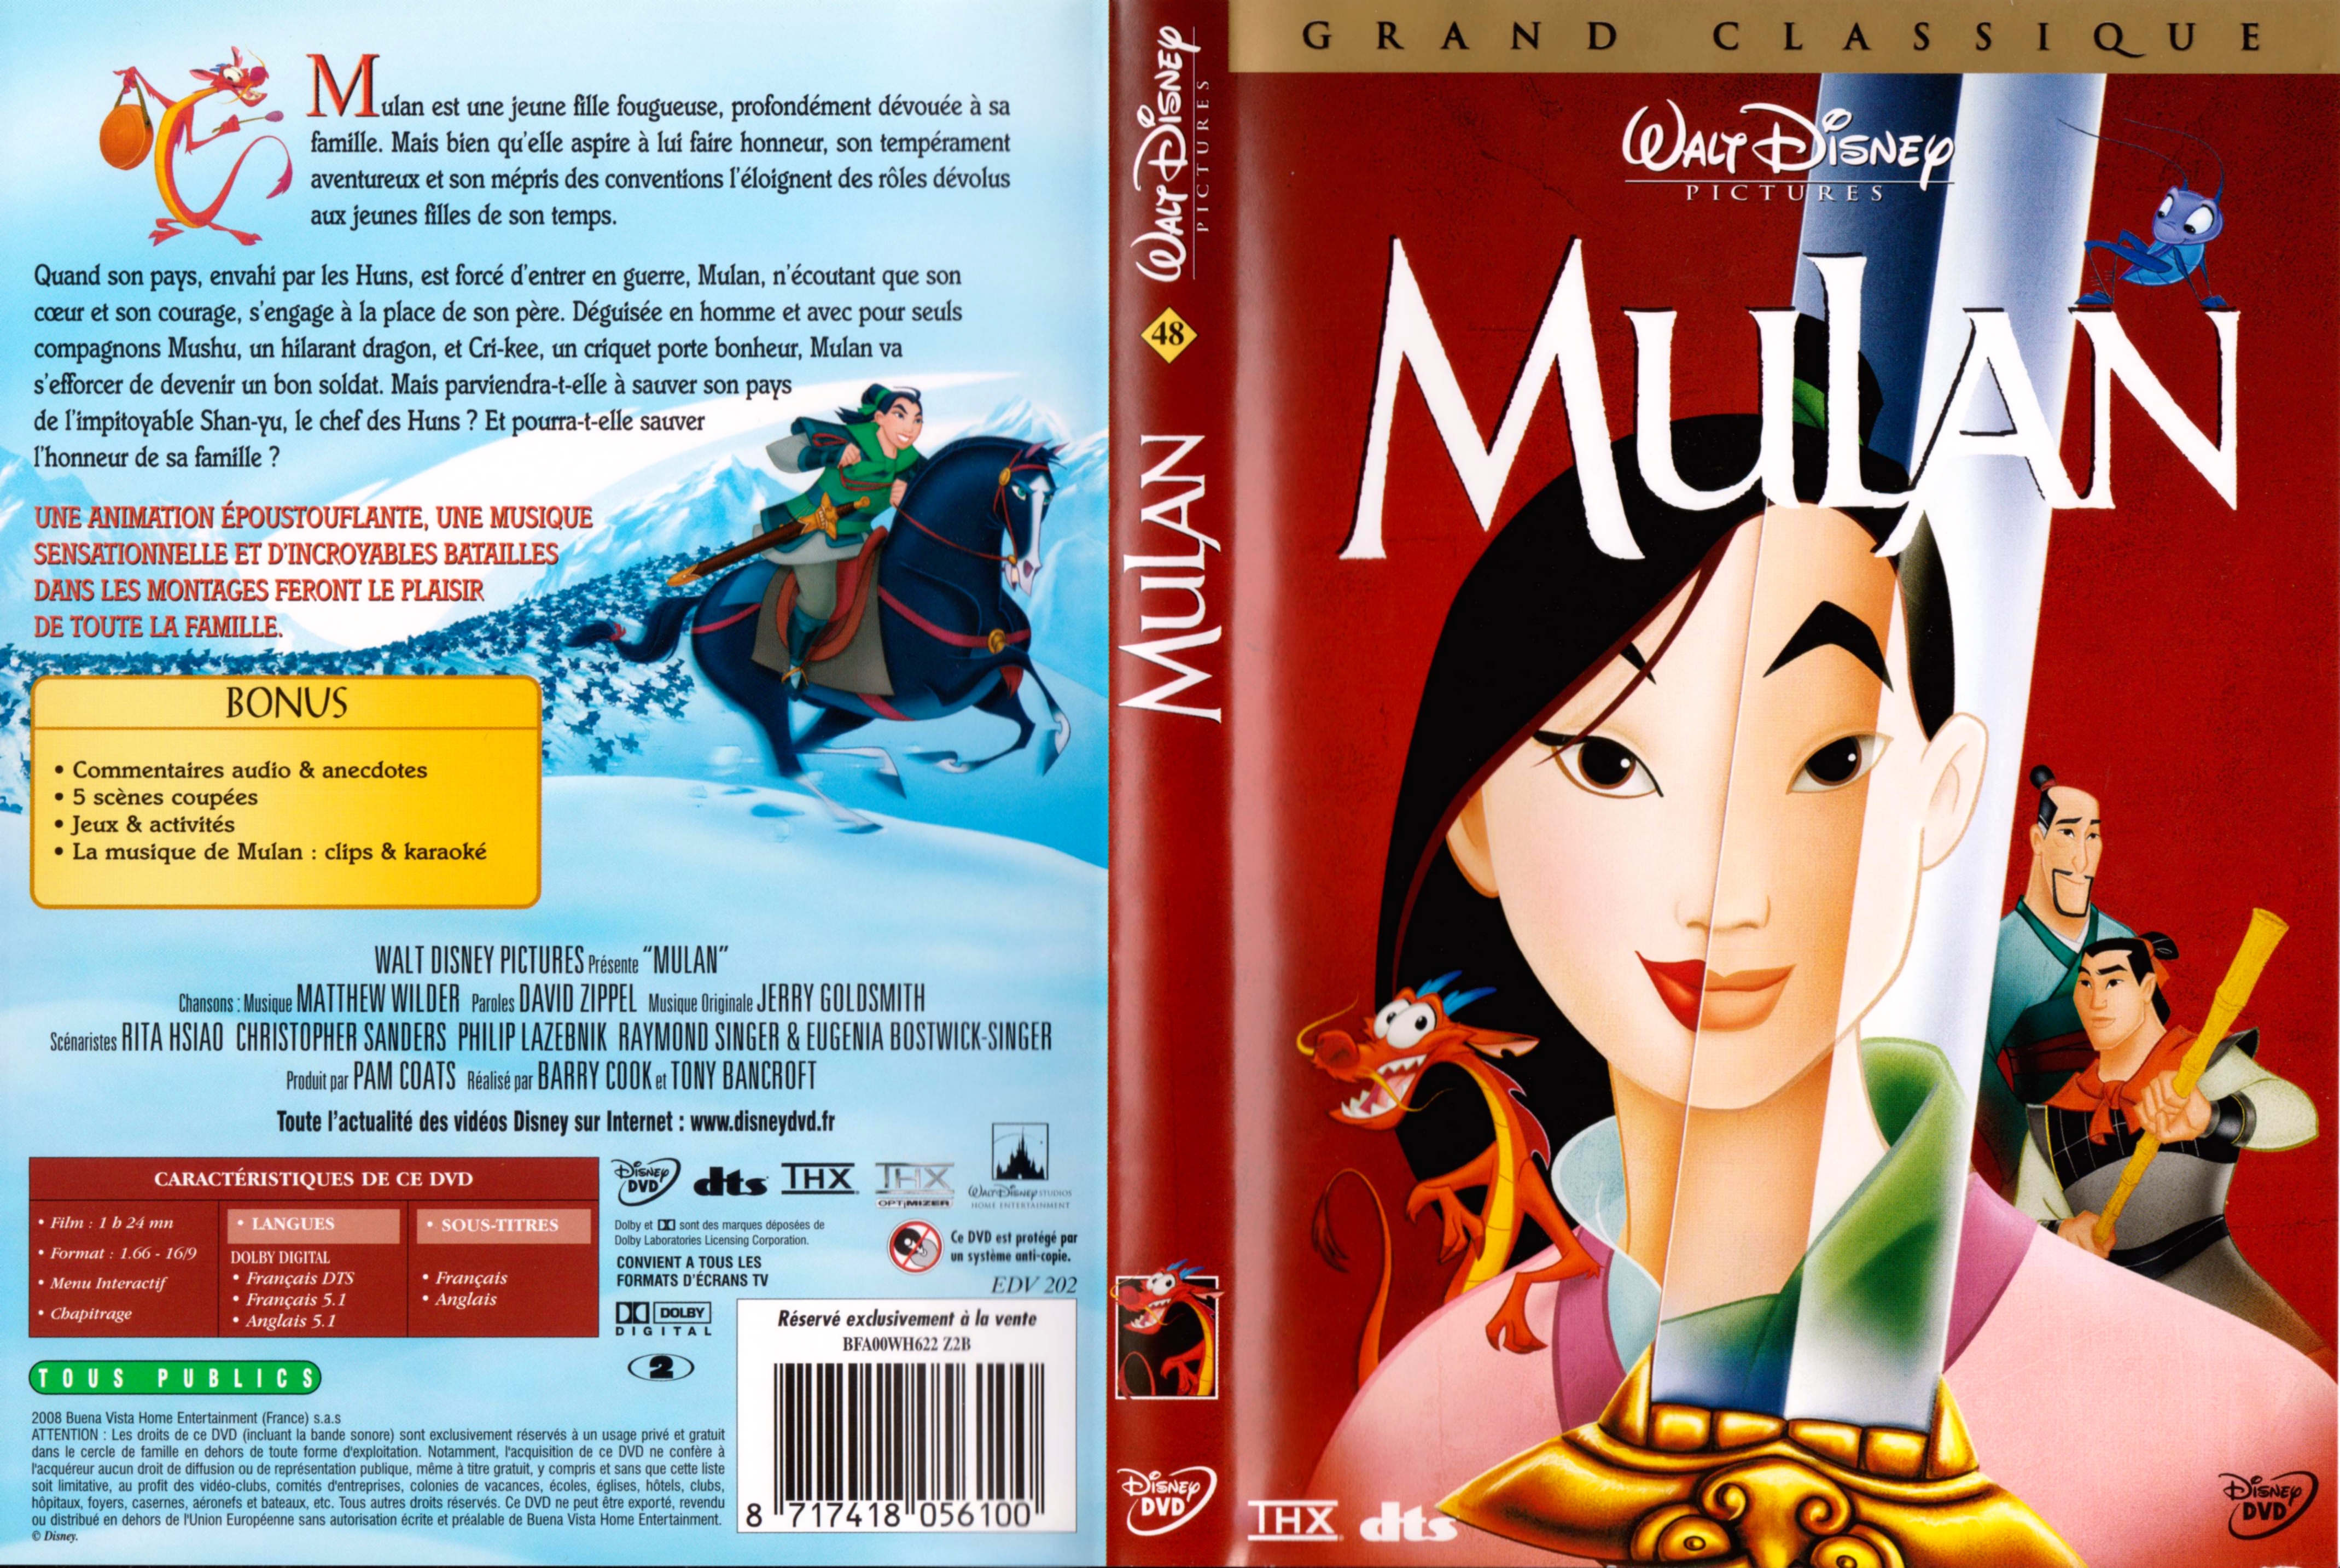 Jaquette DVD Mulan v3